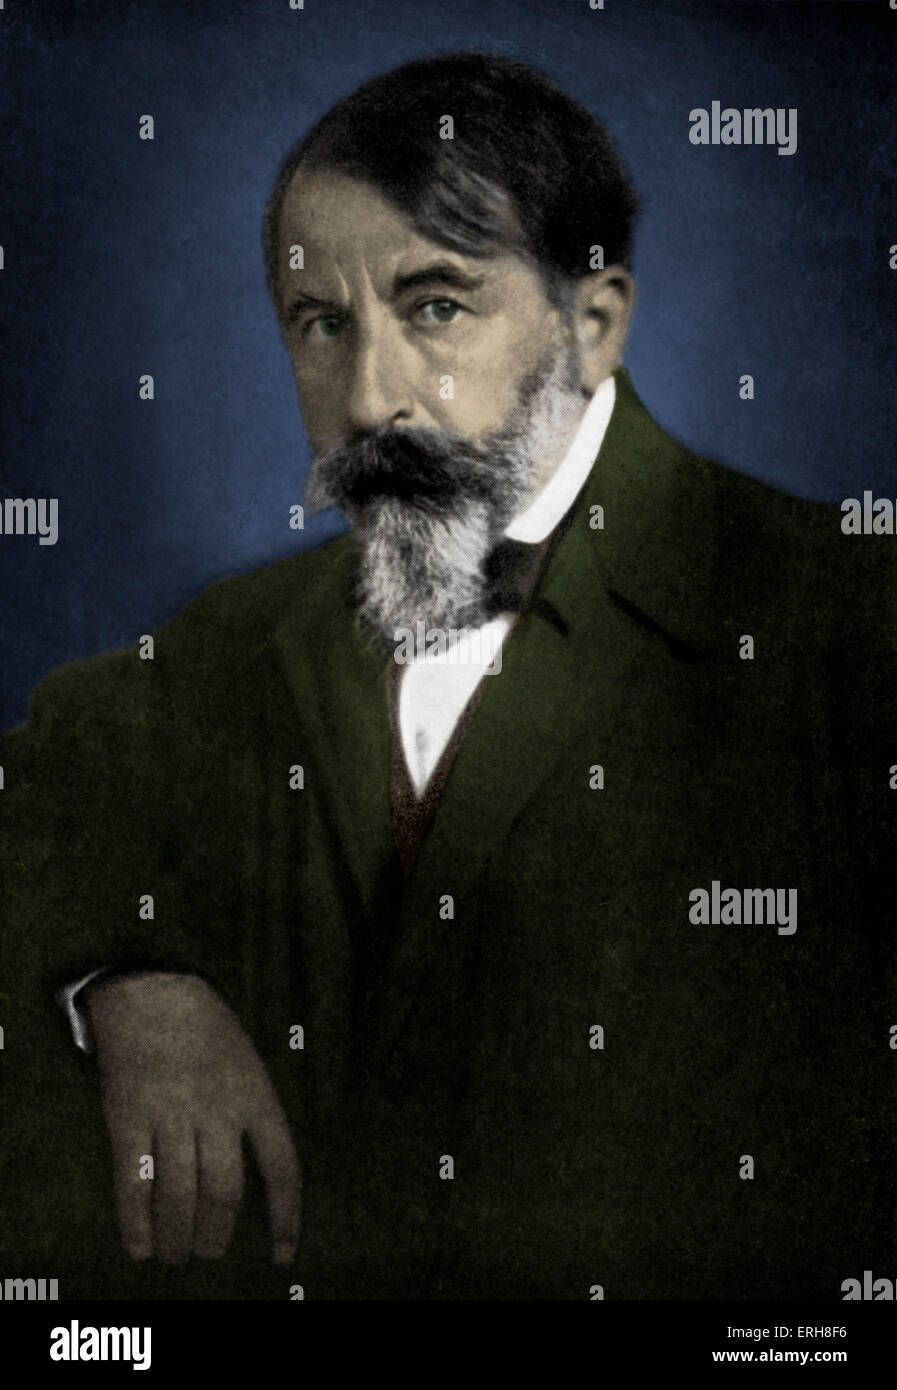 Arthur Schnitzler in 1920. Austrian writer, dramatist and doctor. 15 May 1862 - 21 October 1931. Stock Photo